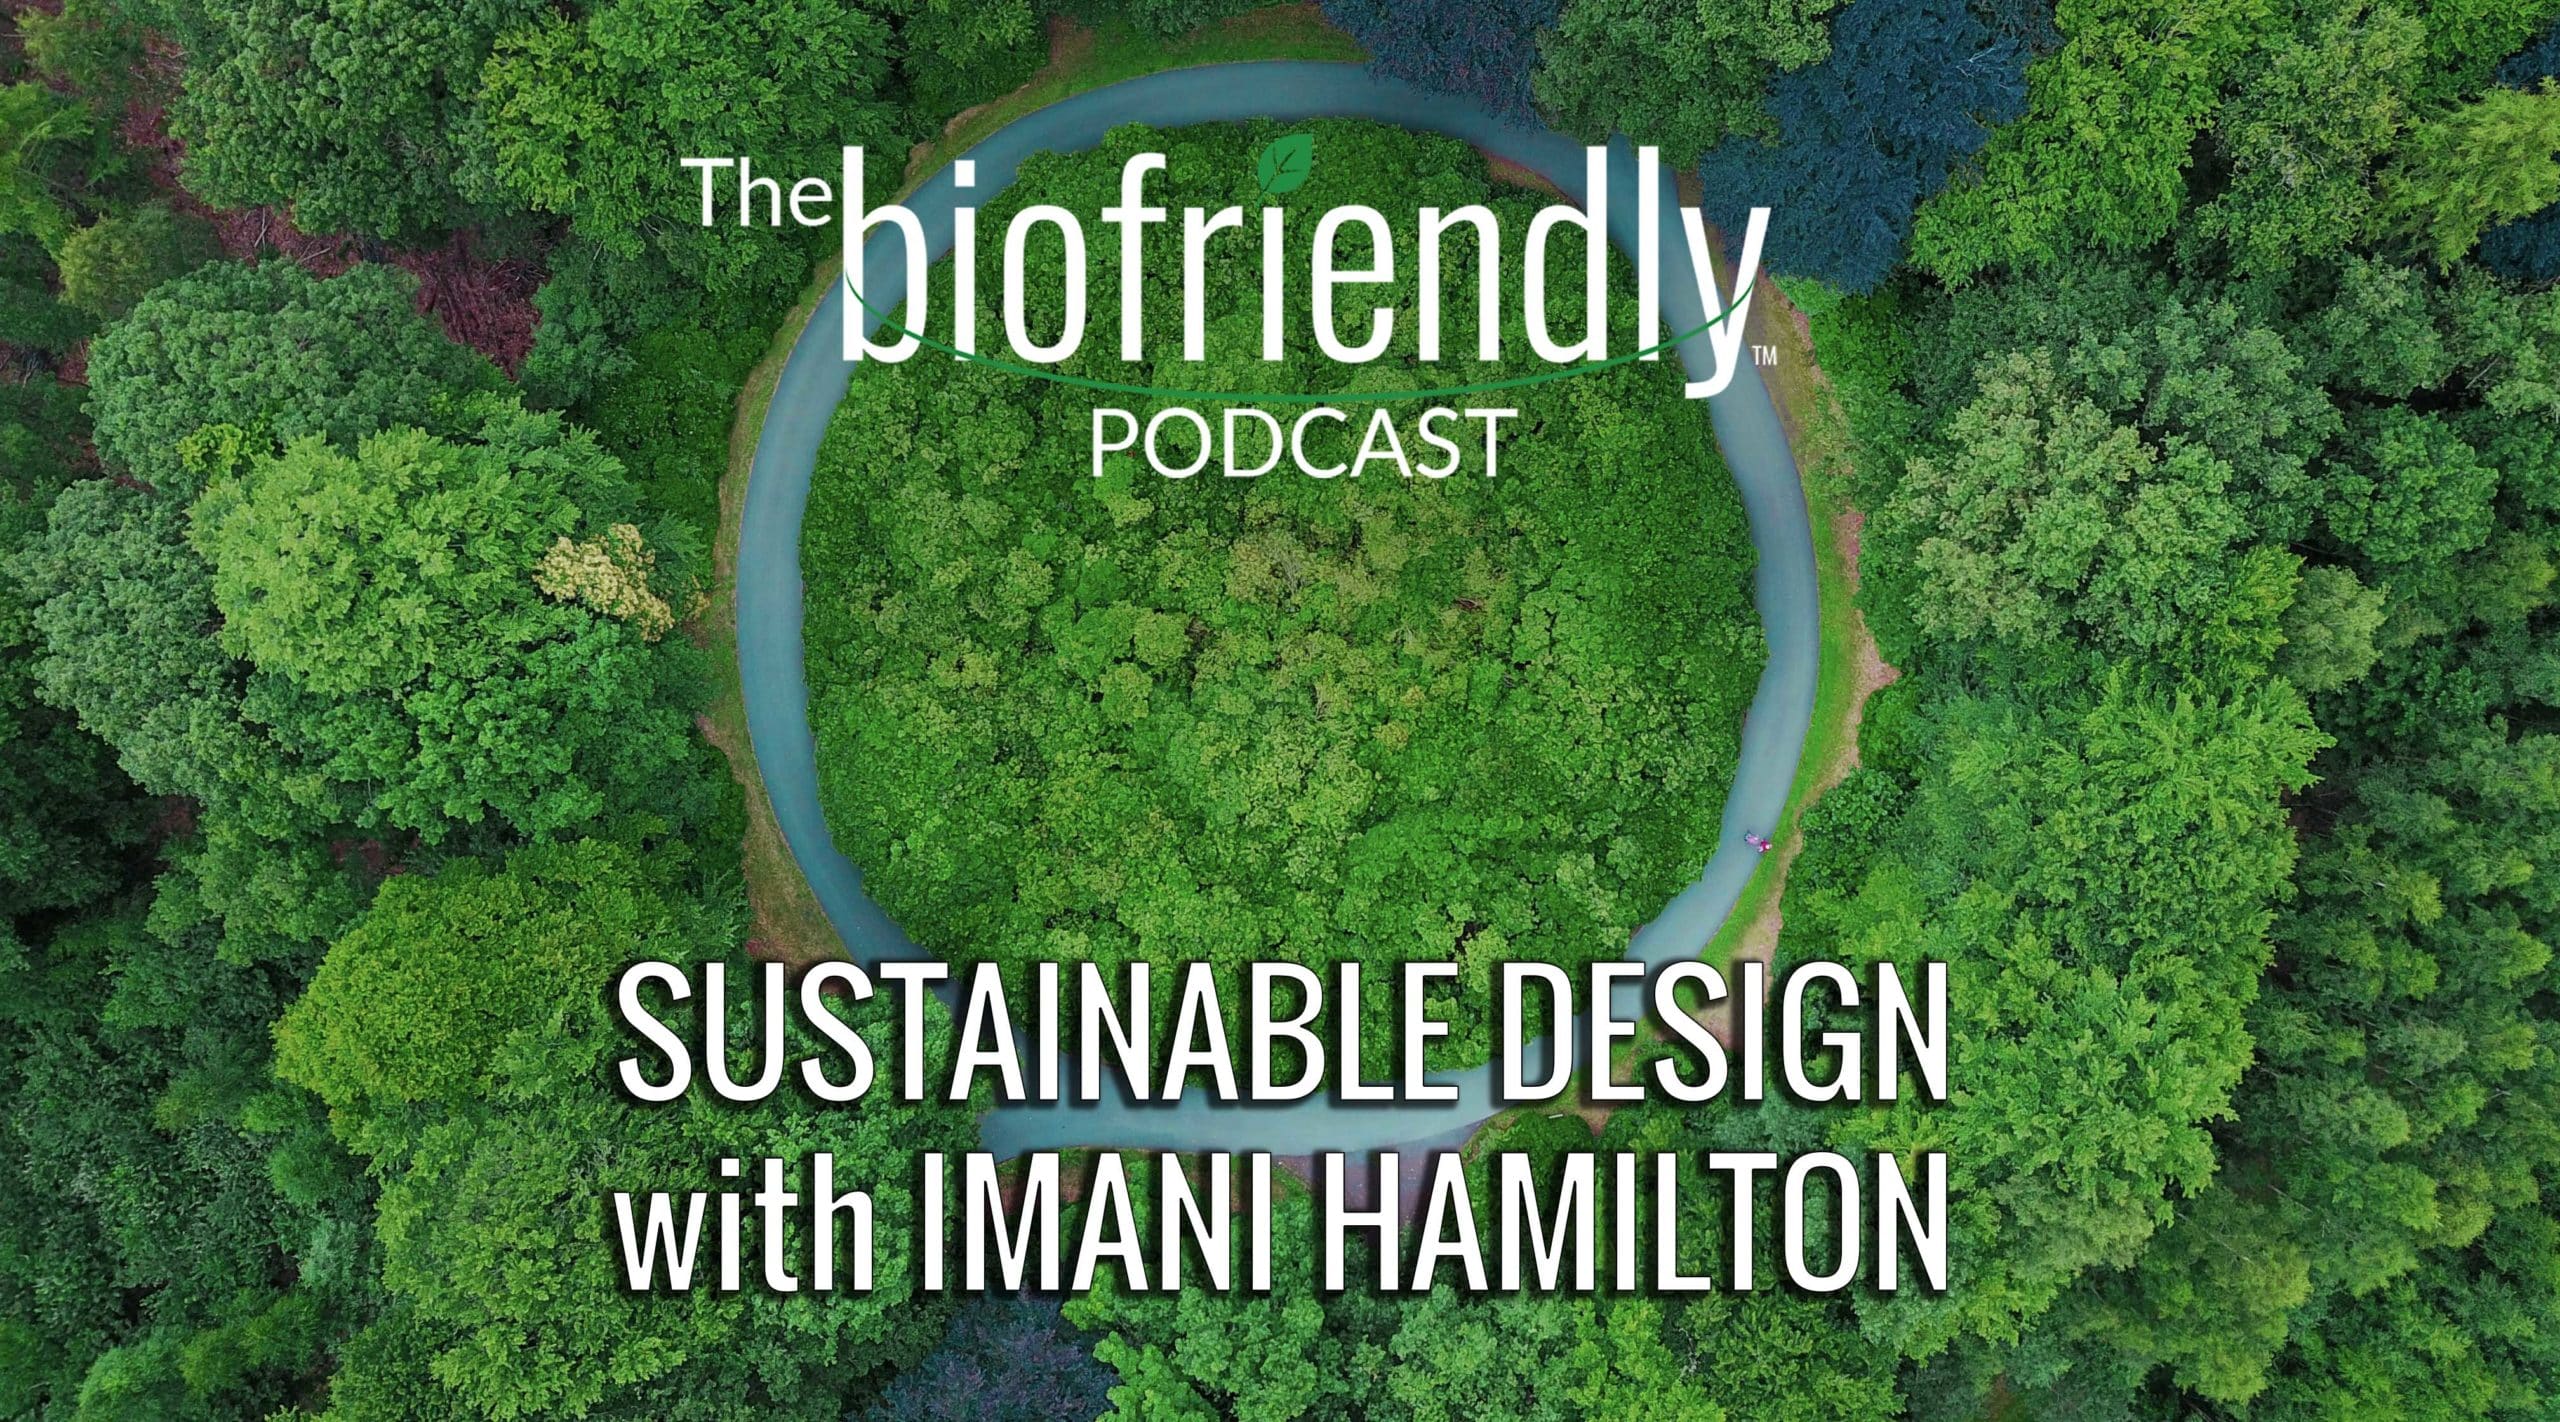 The Biofriendly Podcast - Episode 87 - Sustainable Design with Imani Hamilton